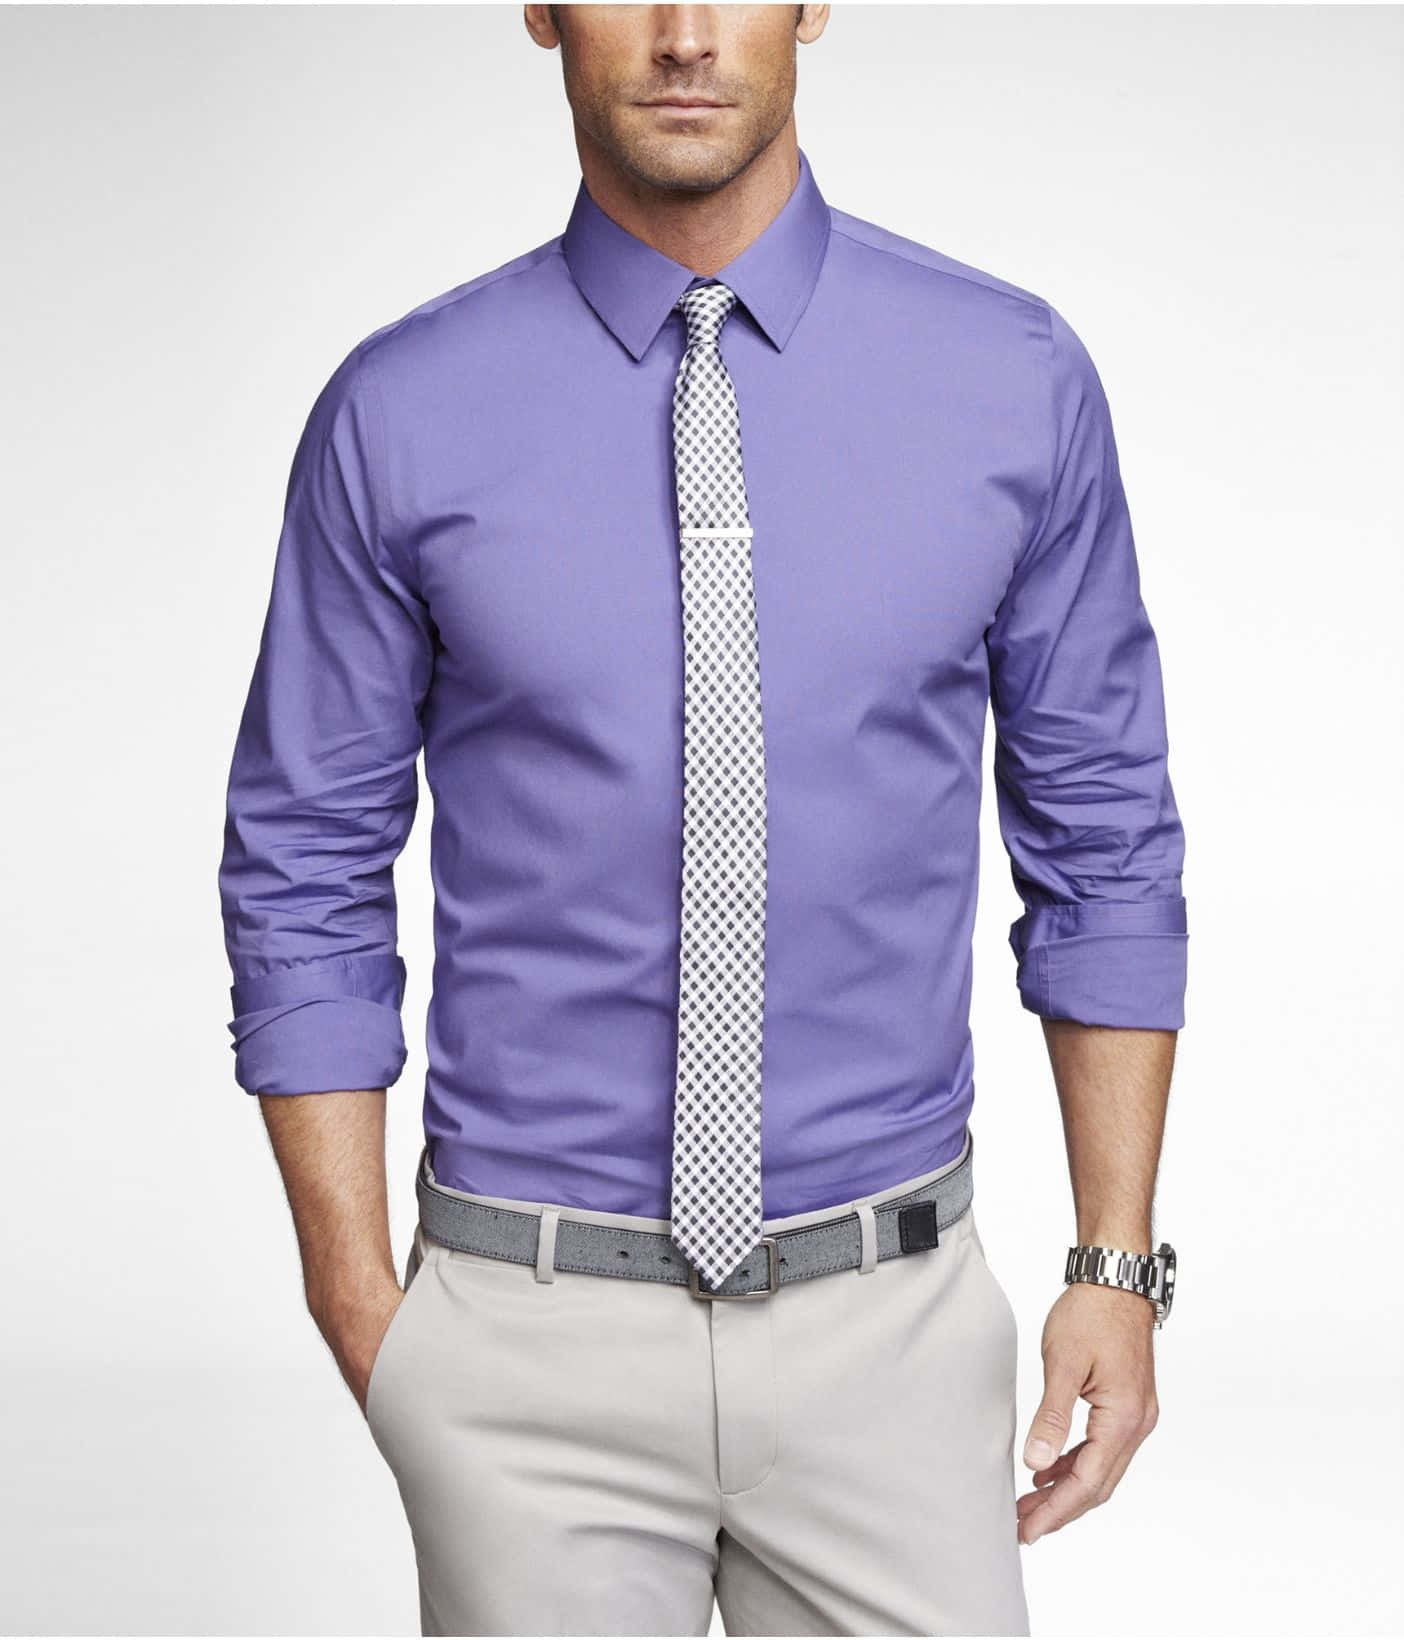 A Trendy Purple Shirt Wallpaper